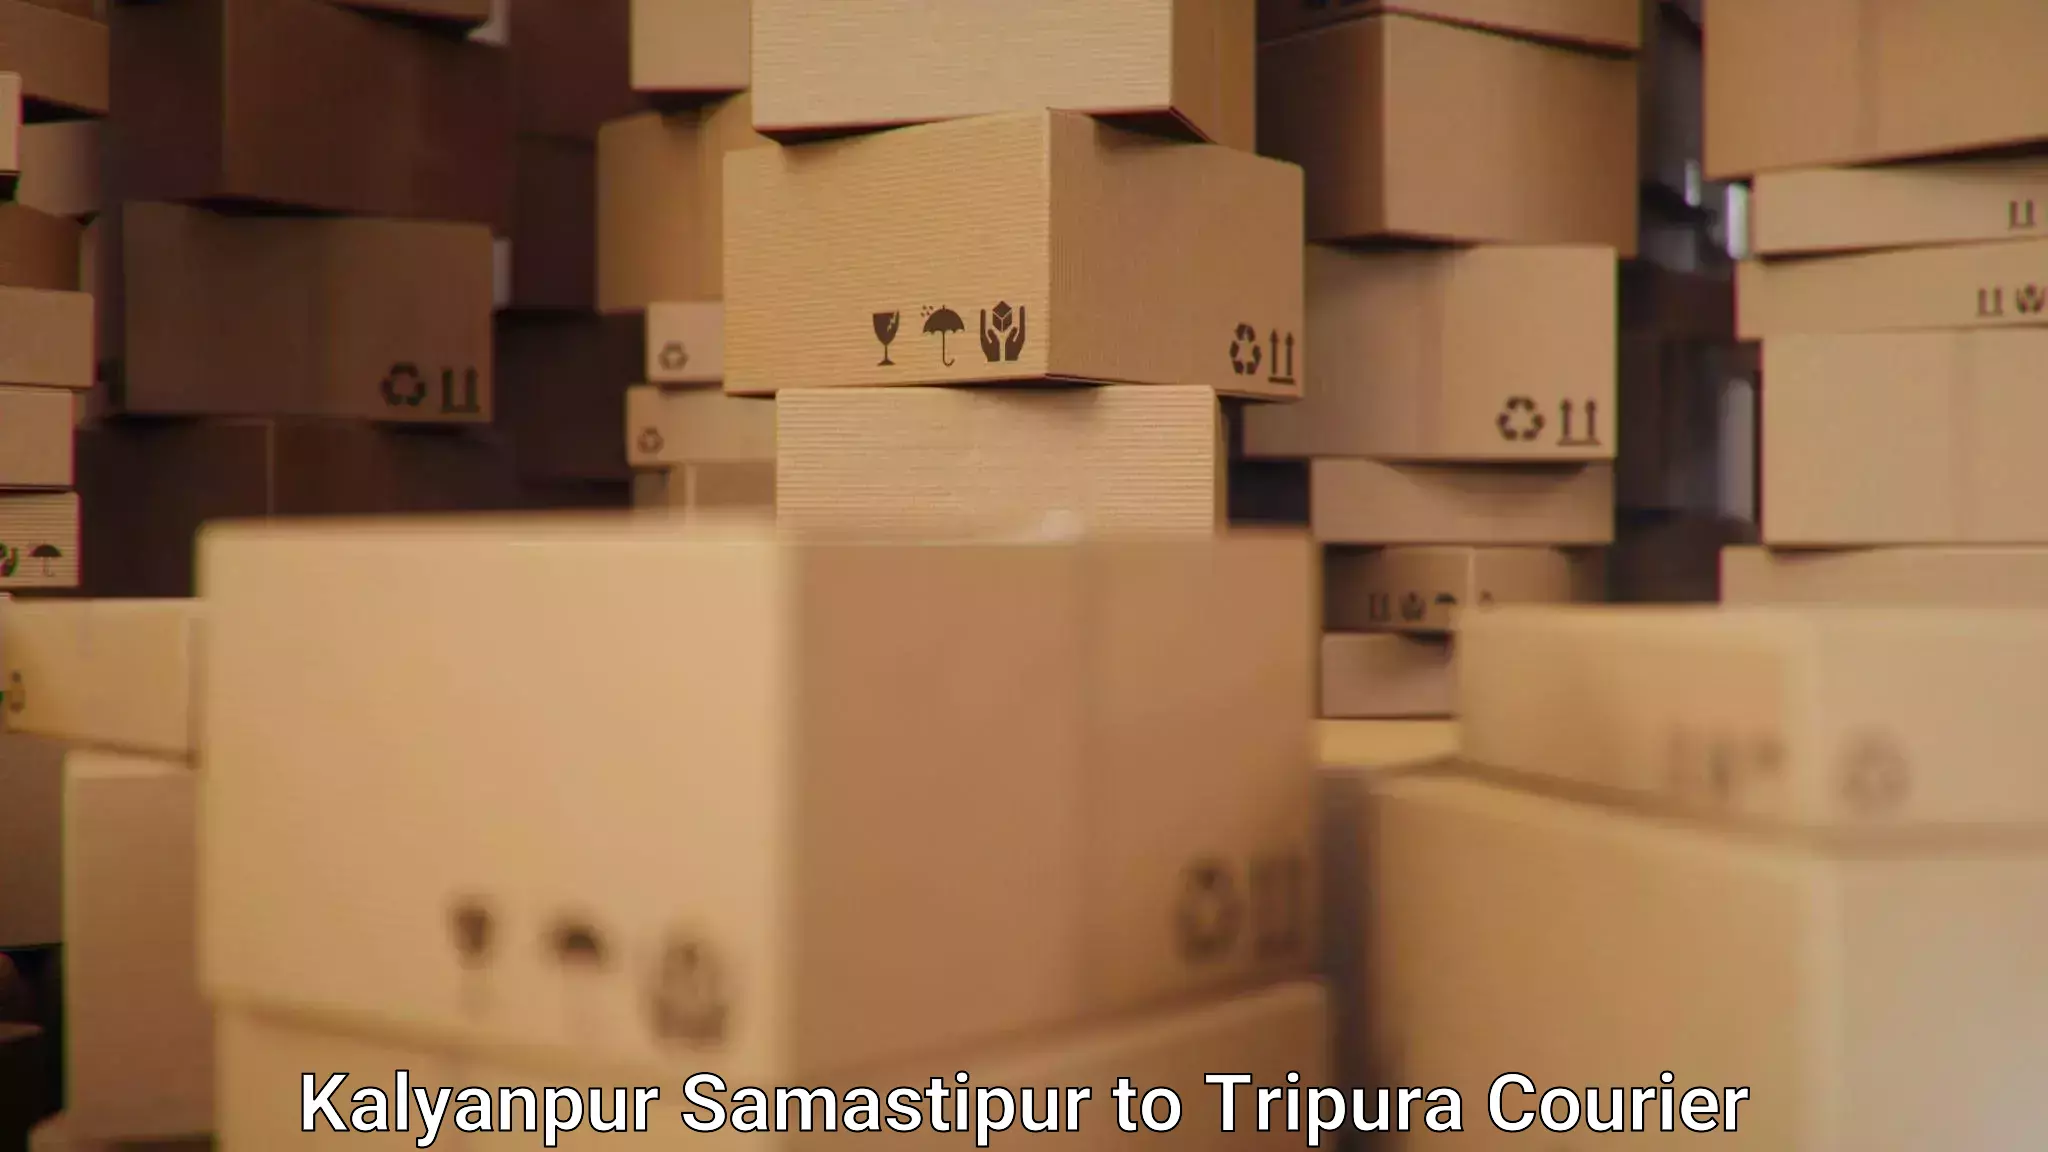 Professional parcel services Kalyanpur Samastipur to Kailashahar